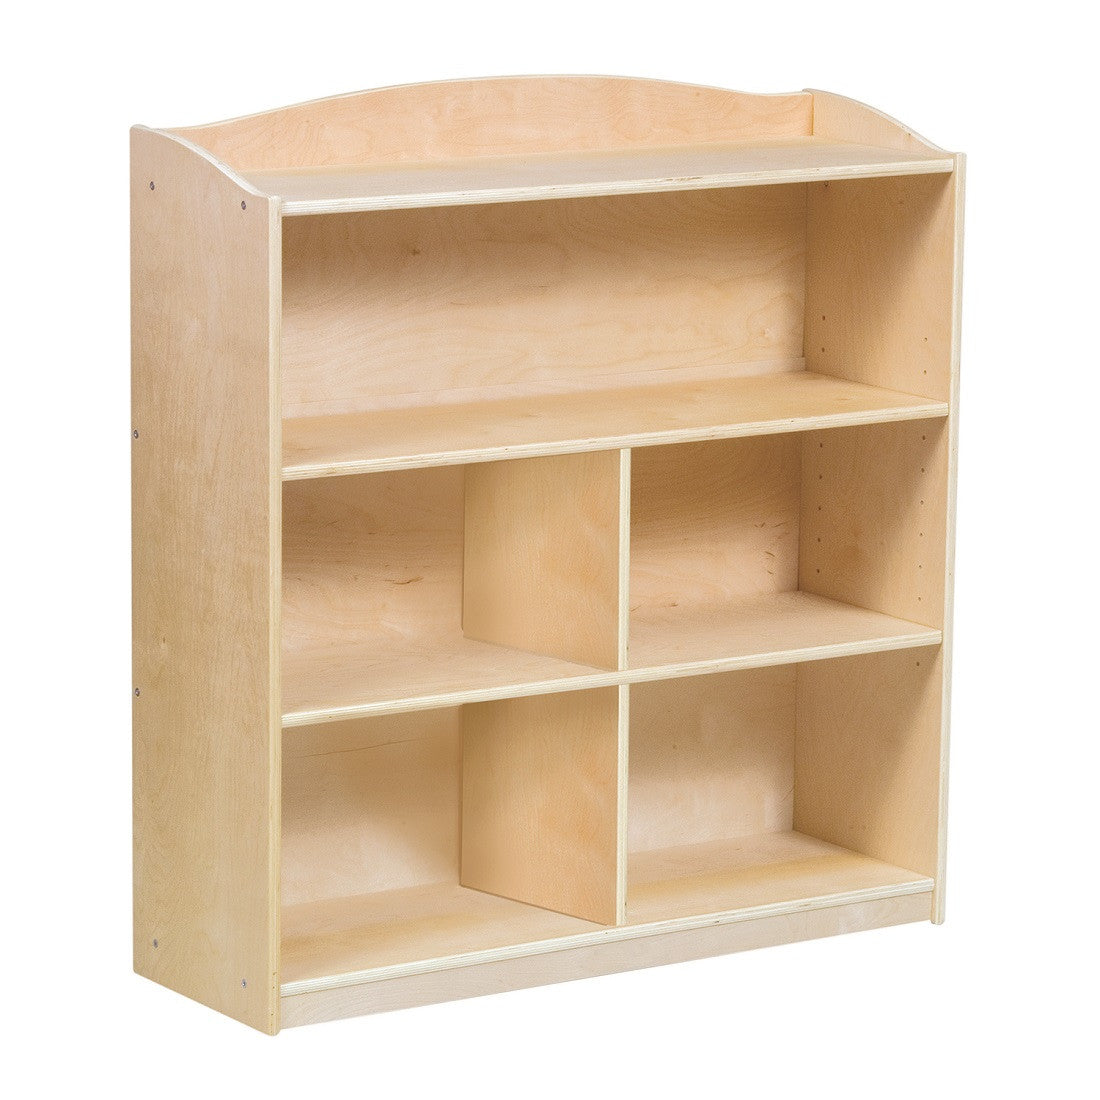 Guidecraft Classroom Furniture - Sgl Sided Bookcase -36"Hg G97013